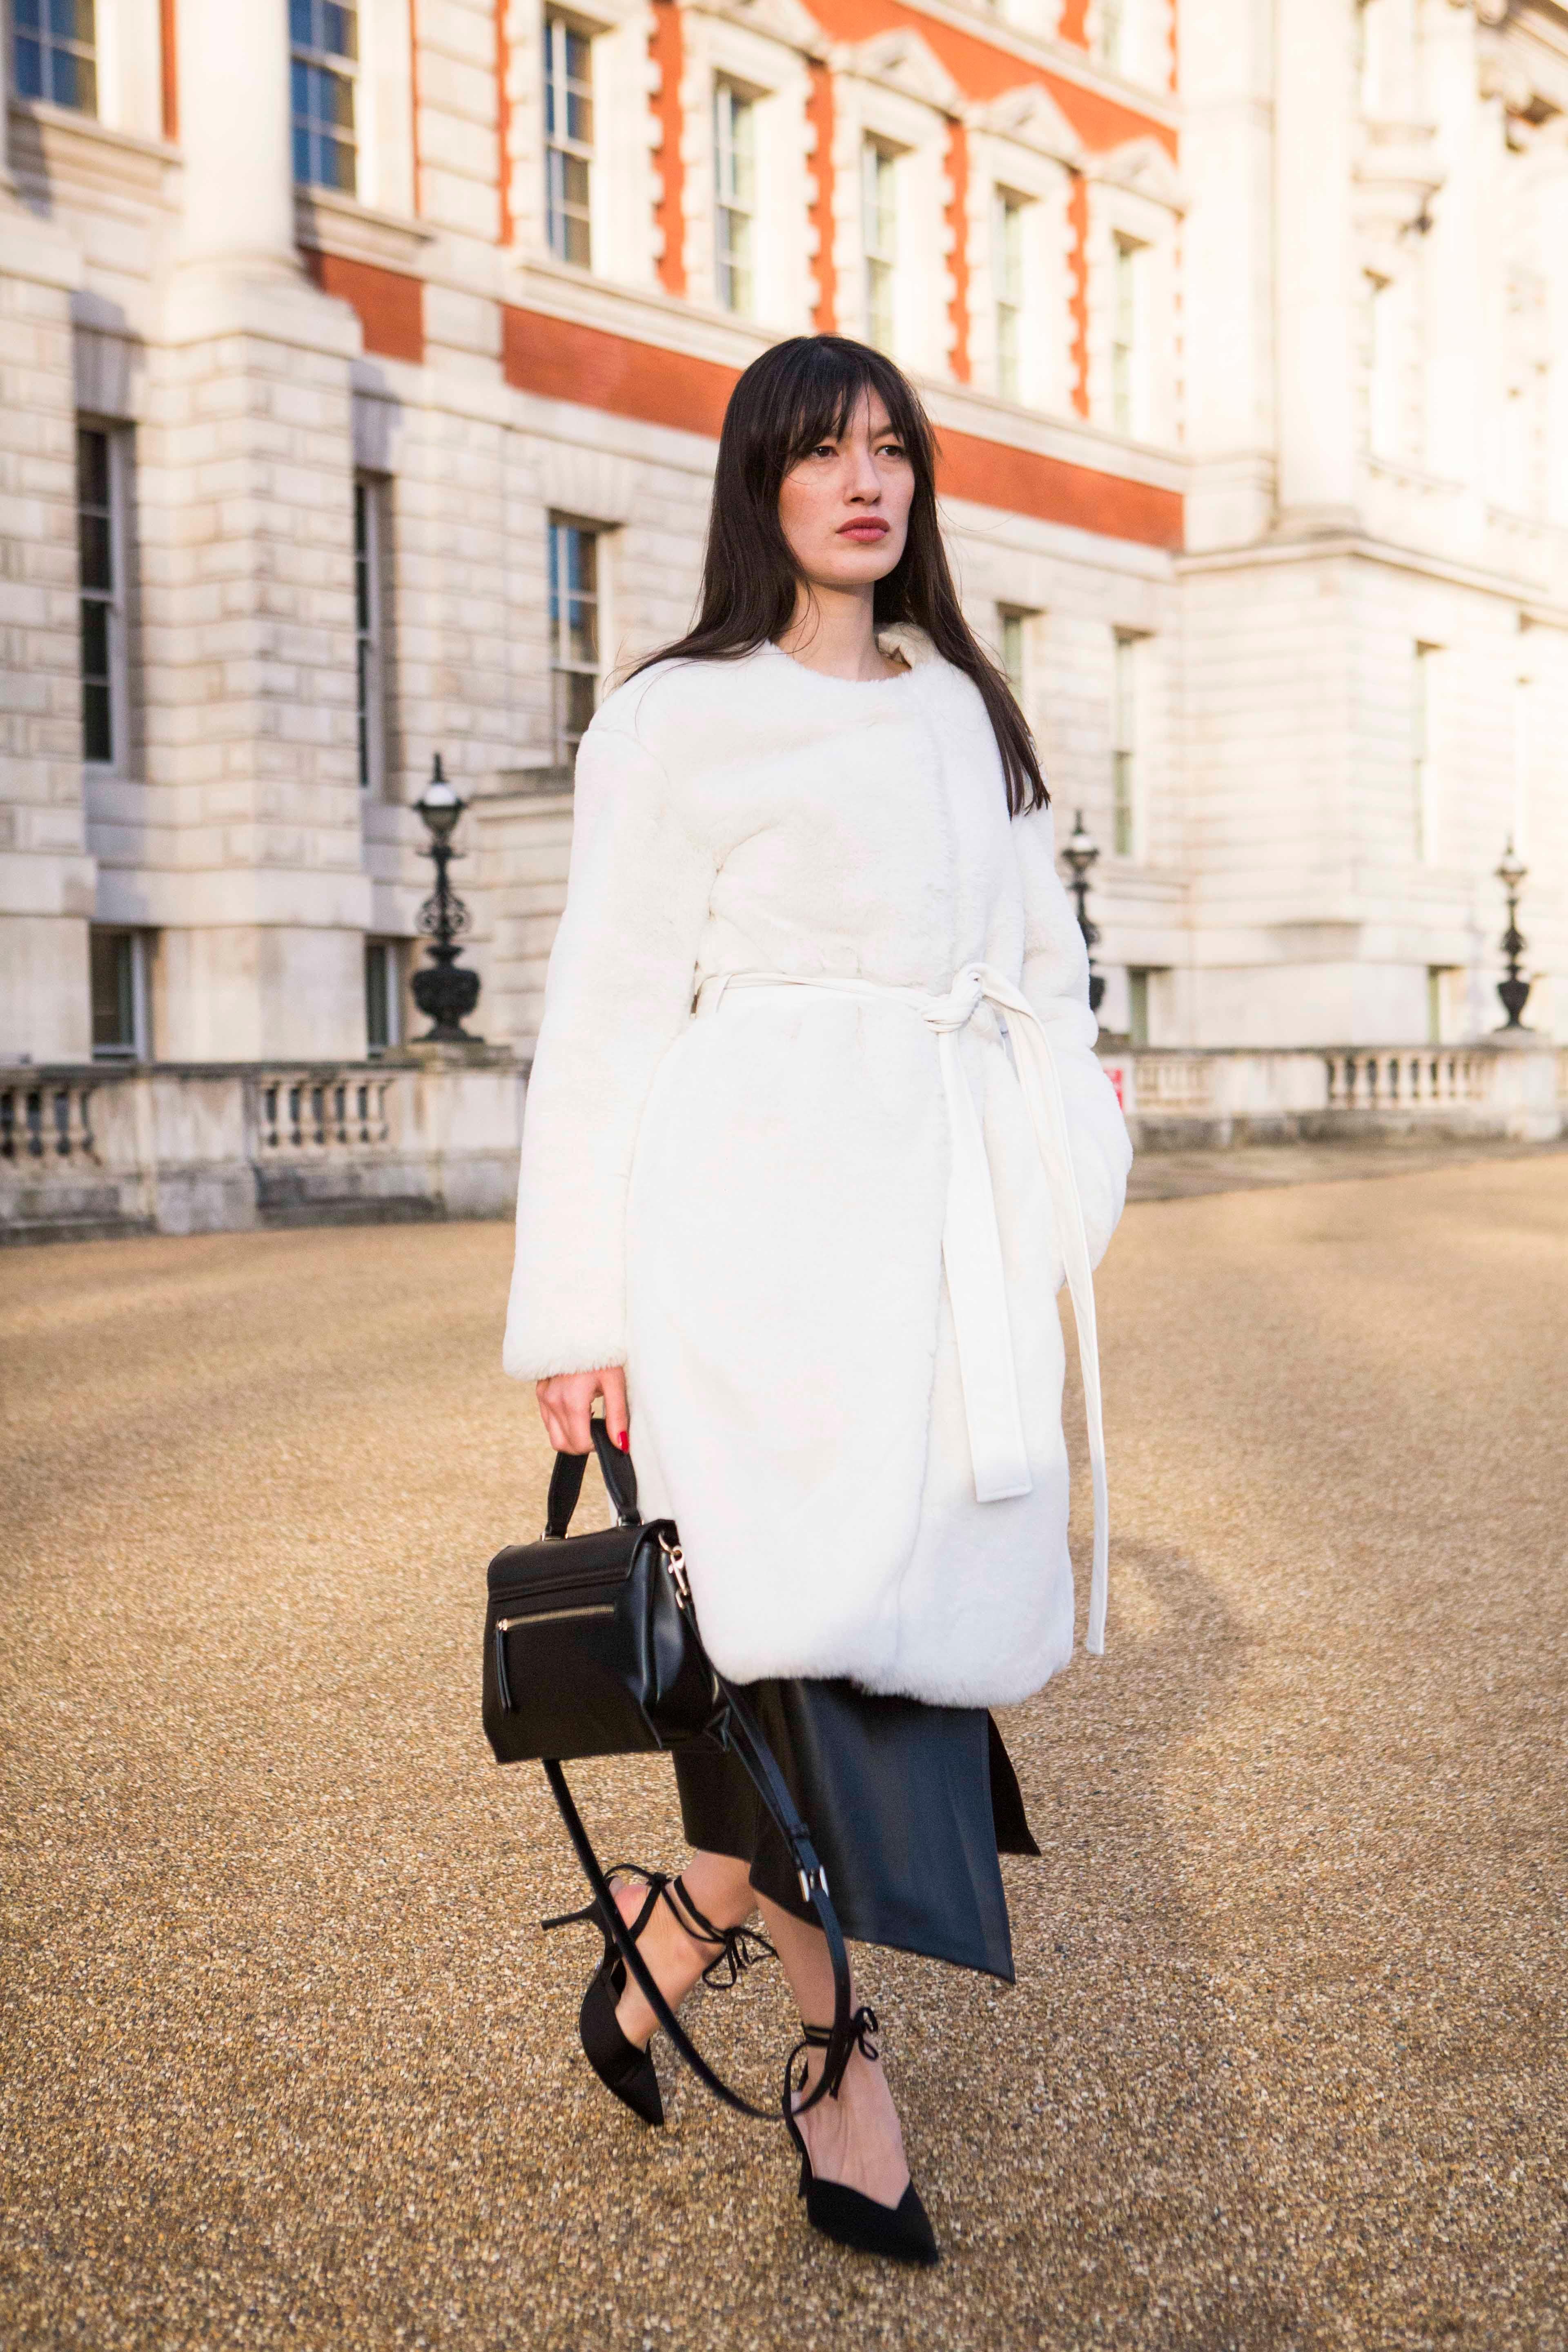 Verheyen London Serena  Collarless Faux Fur Coat in White - Size uk 10  For Sale 2